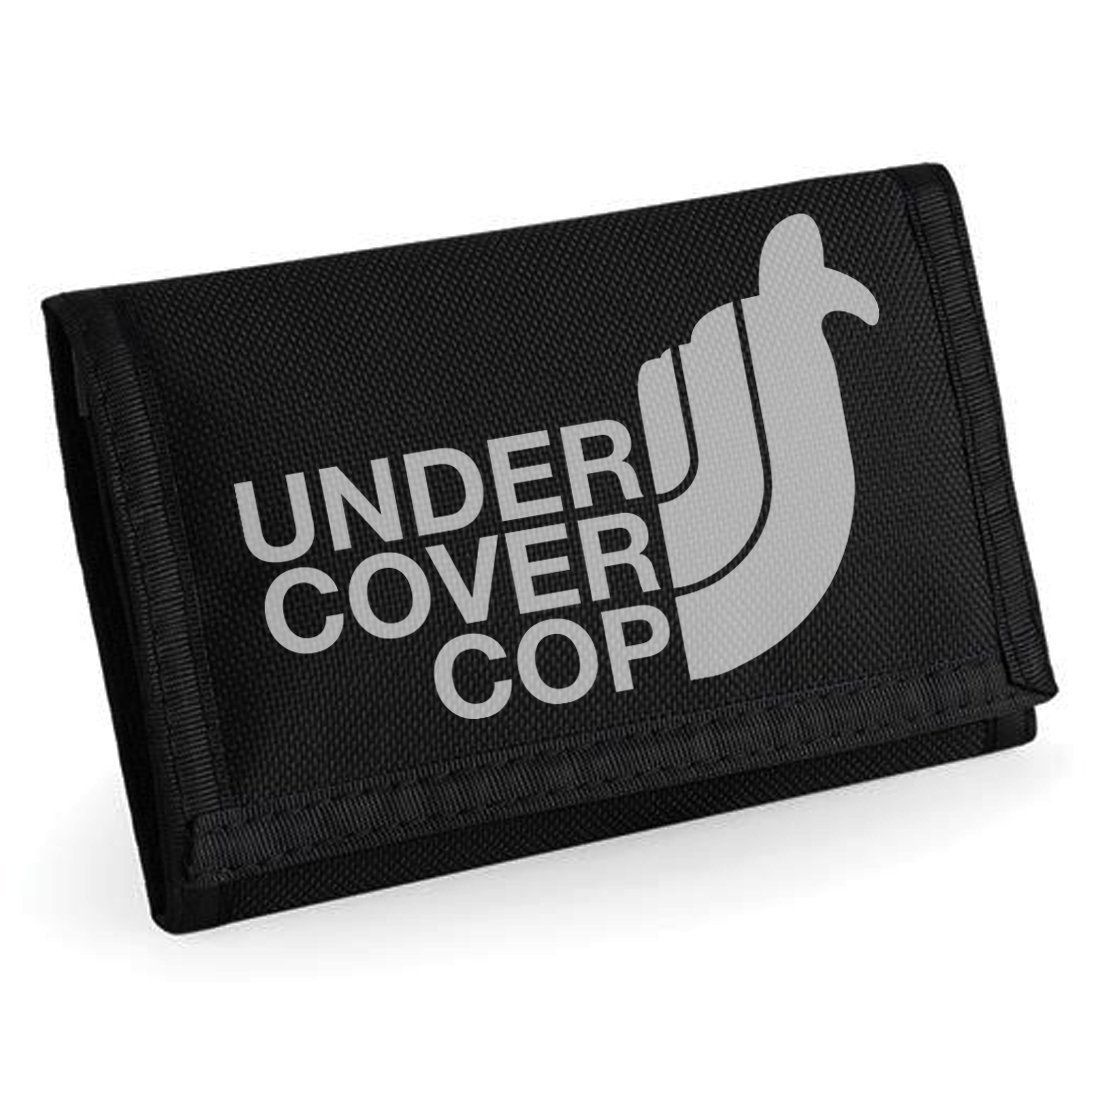 Under Cover Cop Wallet